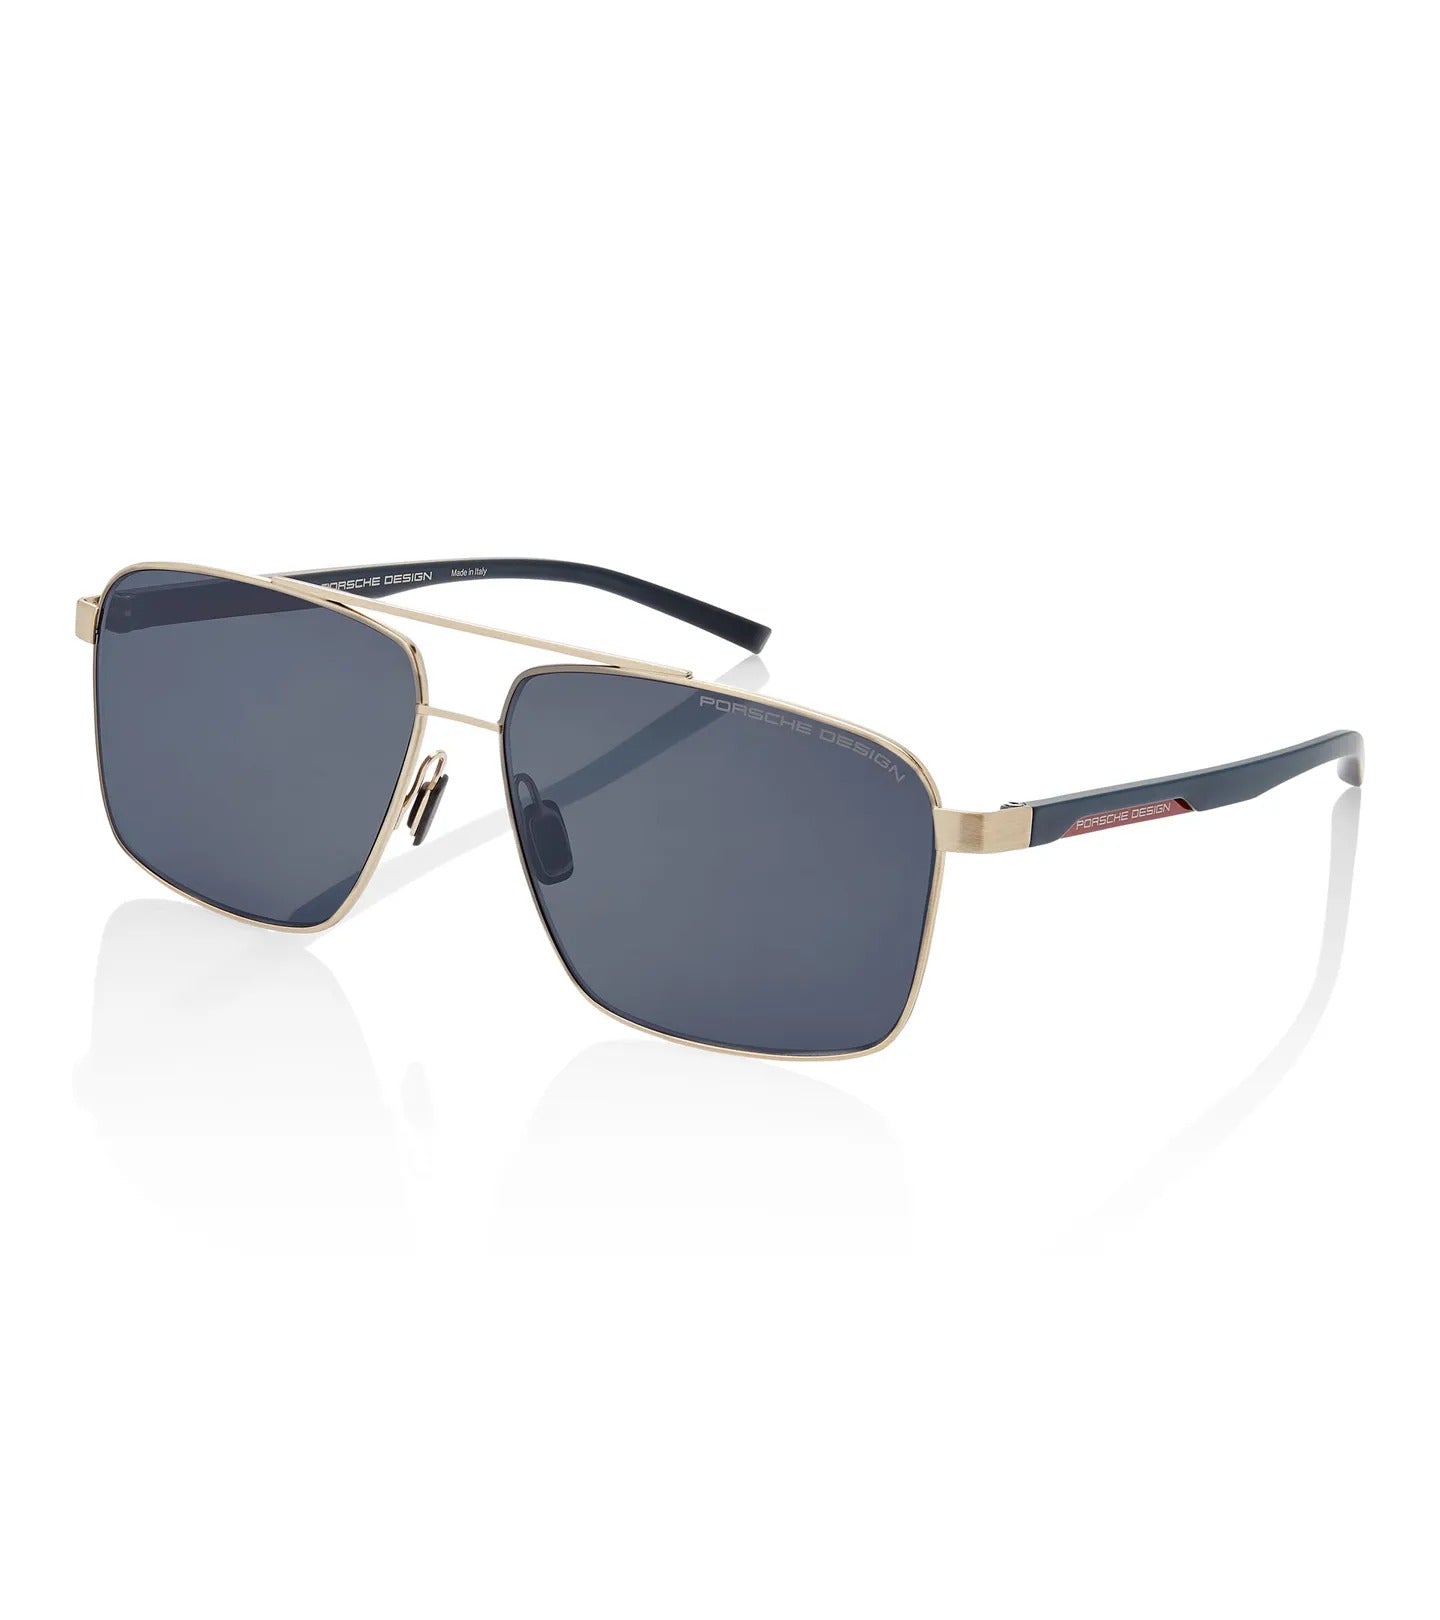 Porsche Design Men's Blue-Black Aviator Sunglasses